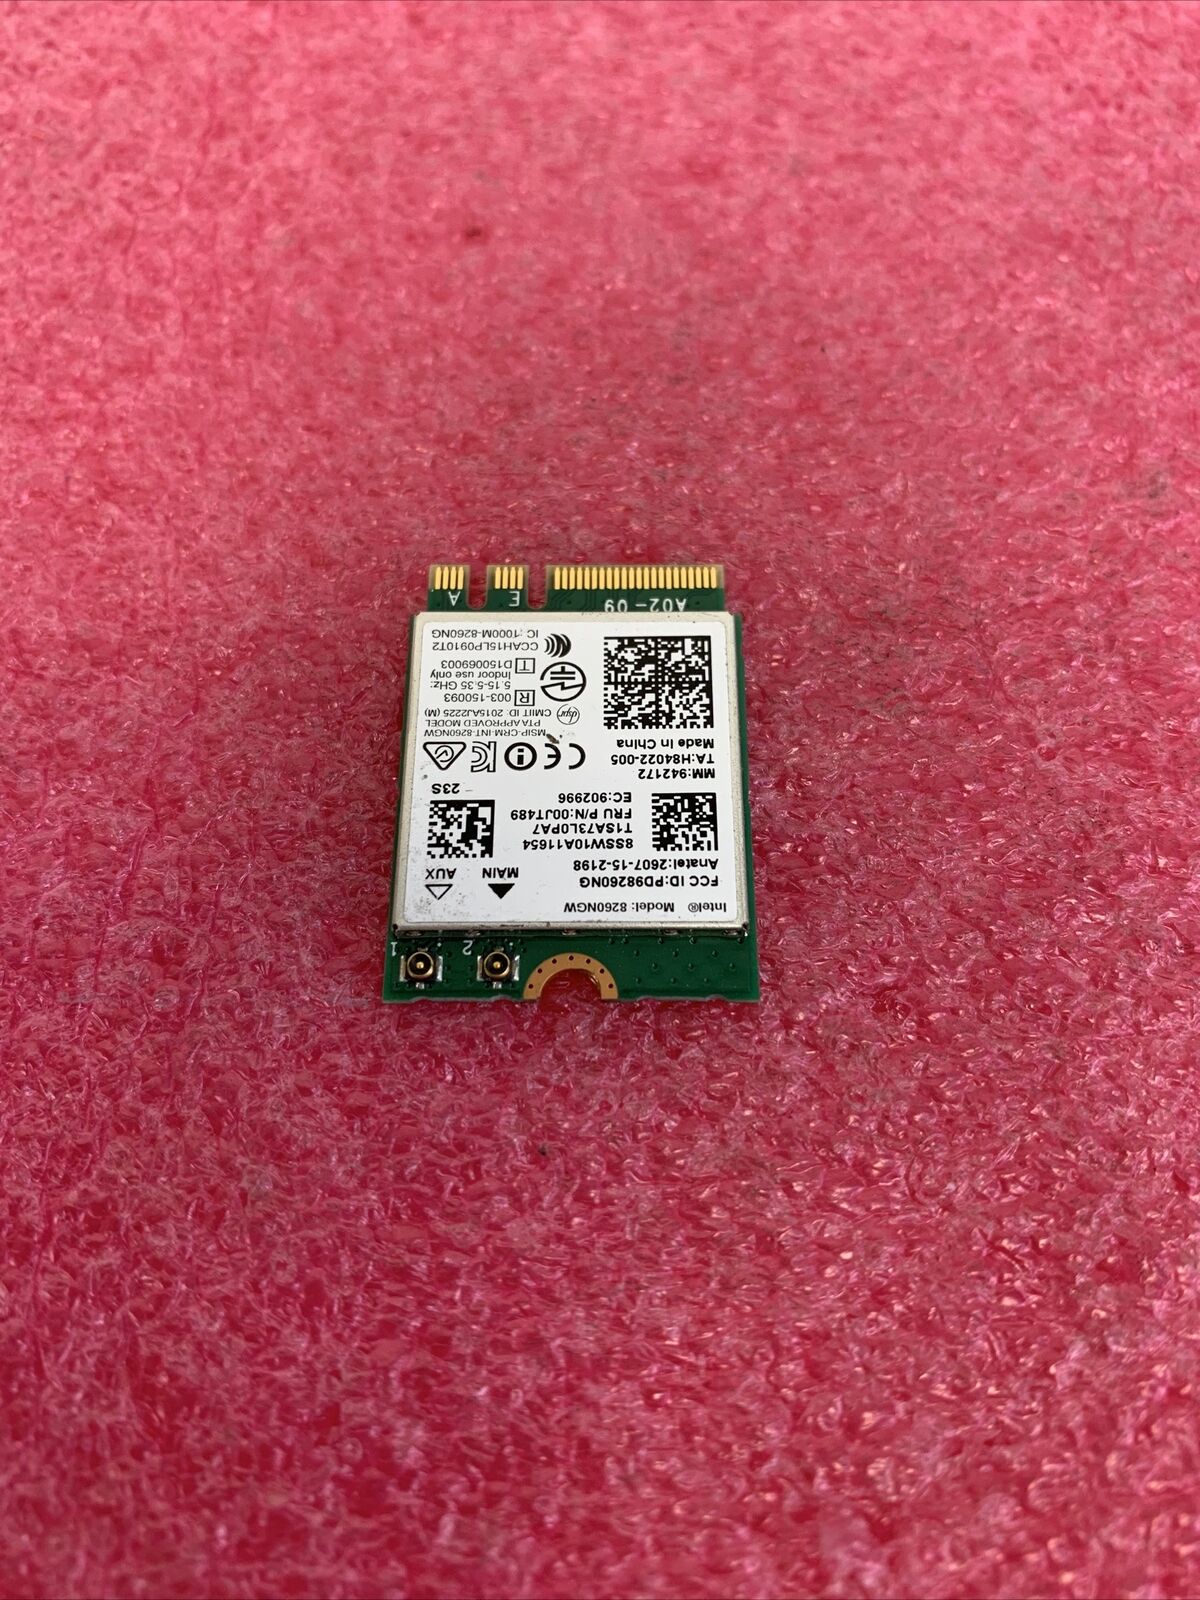 Intel 8260NGW Dual Band Wireless-AC Bluetooth WiFi M.2 Card